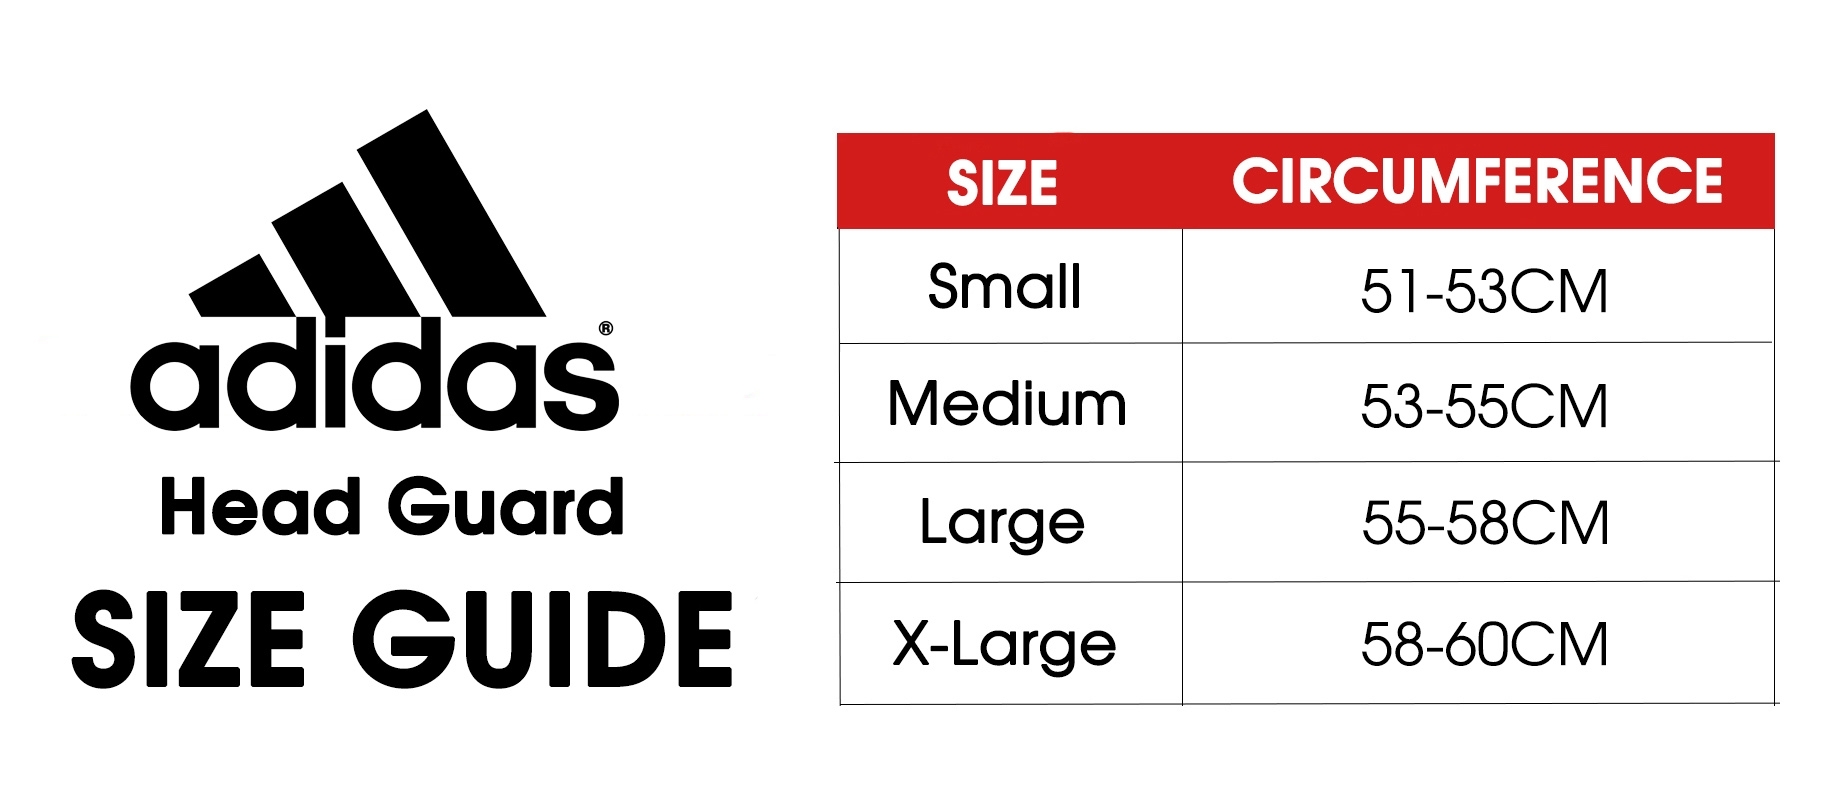 Adidas AIBA Headguard Size Guide